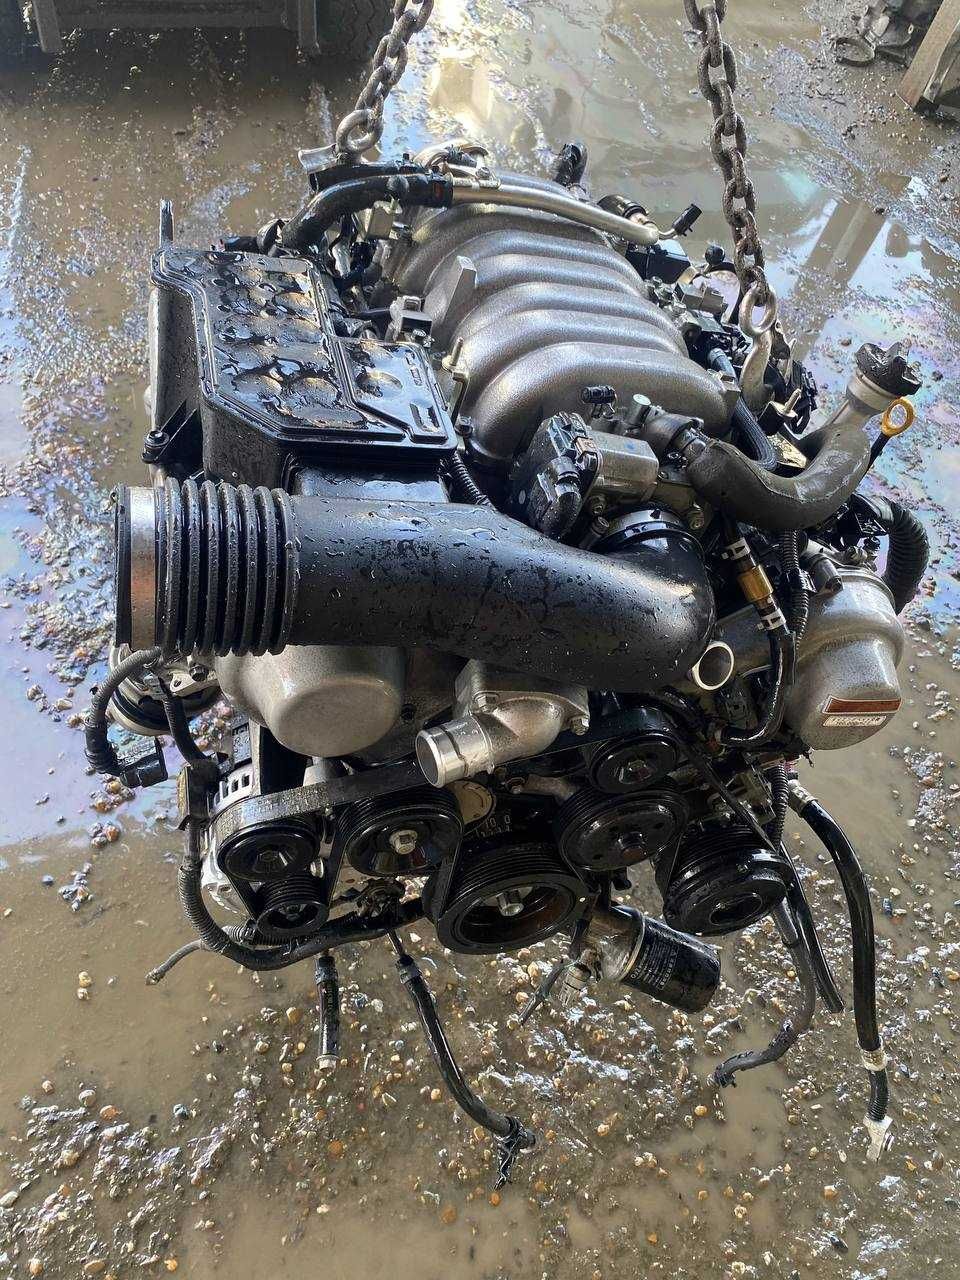 Двигатель Toyota 3UZ-FE +КПП автомат урнатиб бериш+кафолати биланю№011